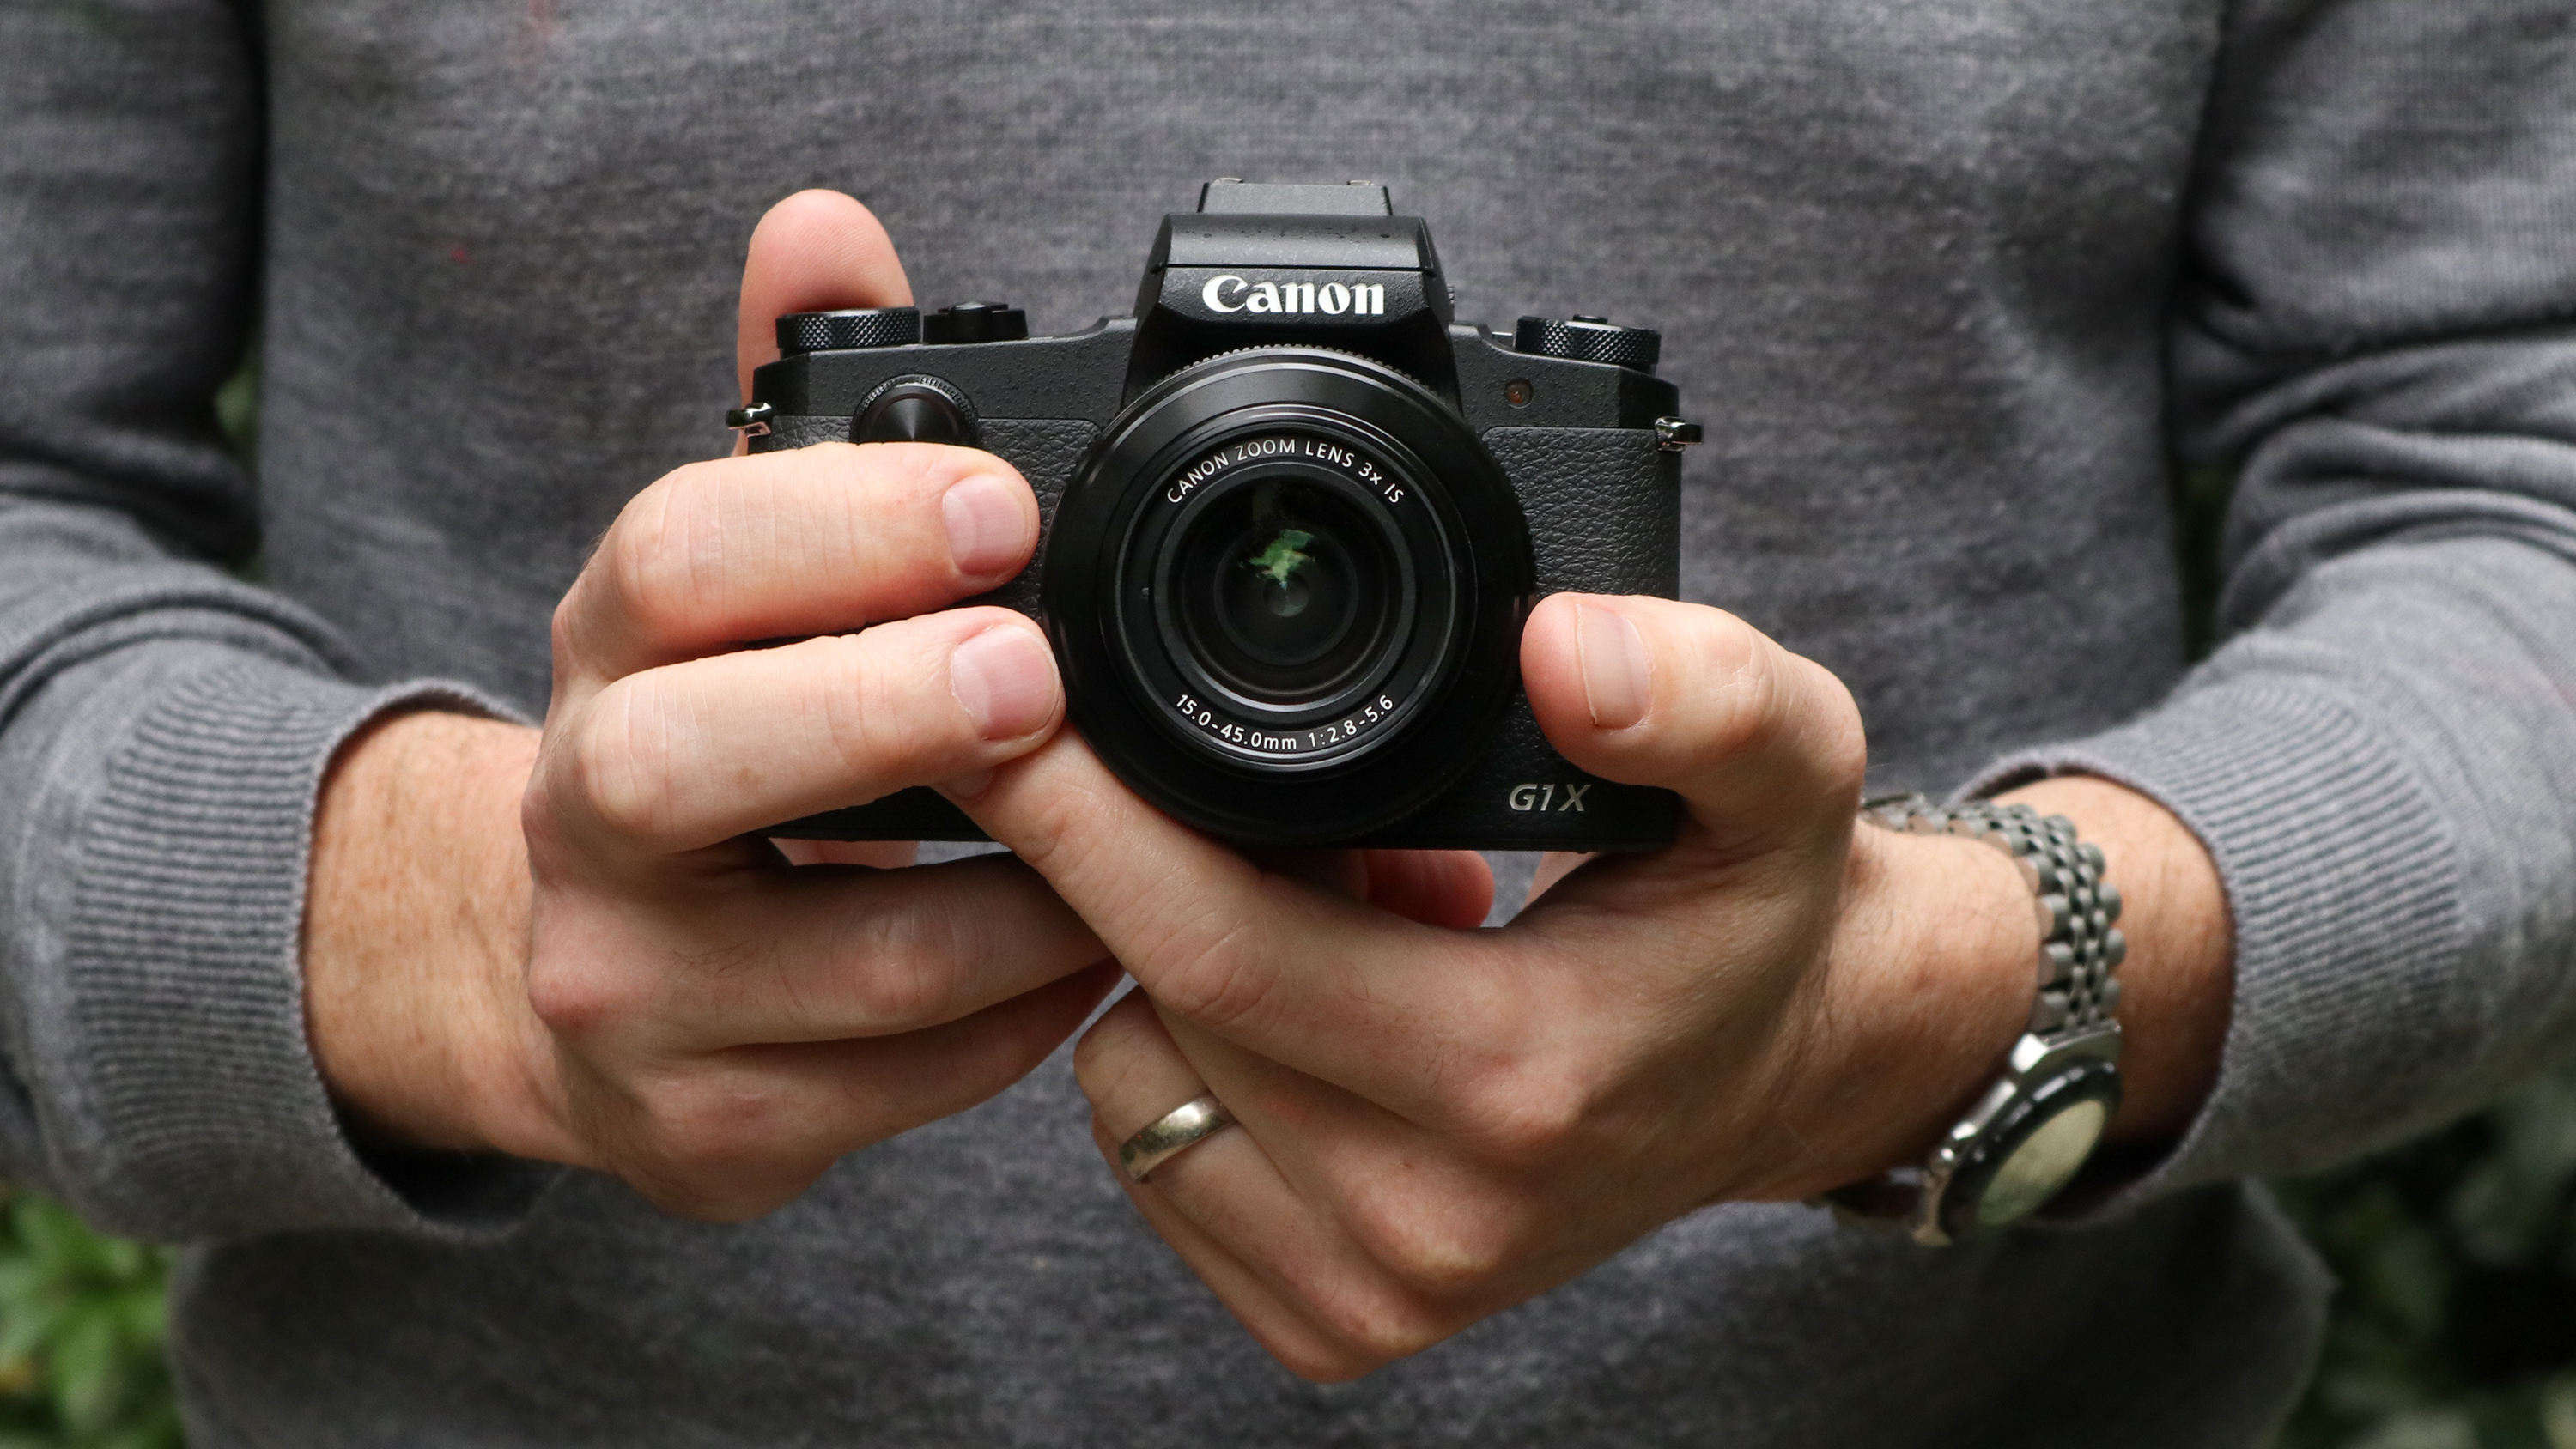 Best compact camera: Canon PowerShot G1 X Mark III